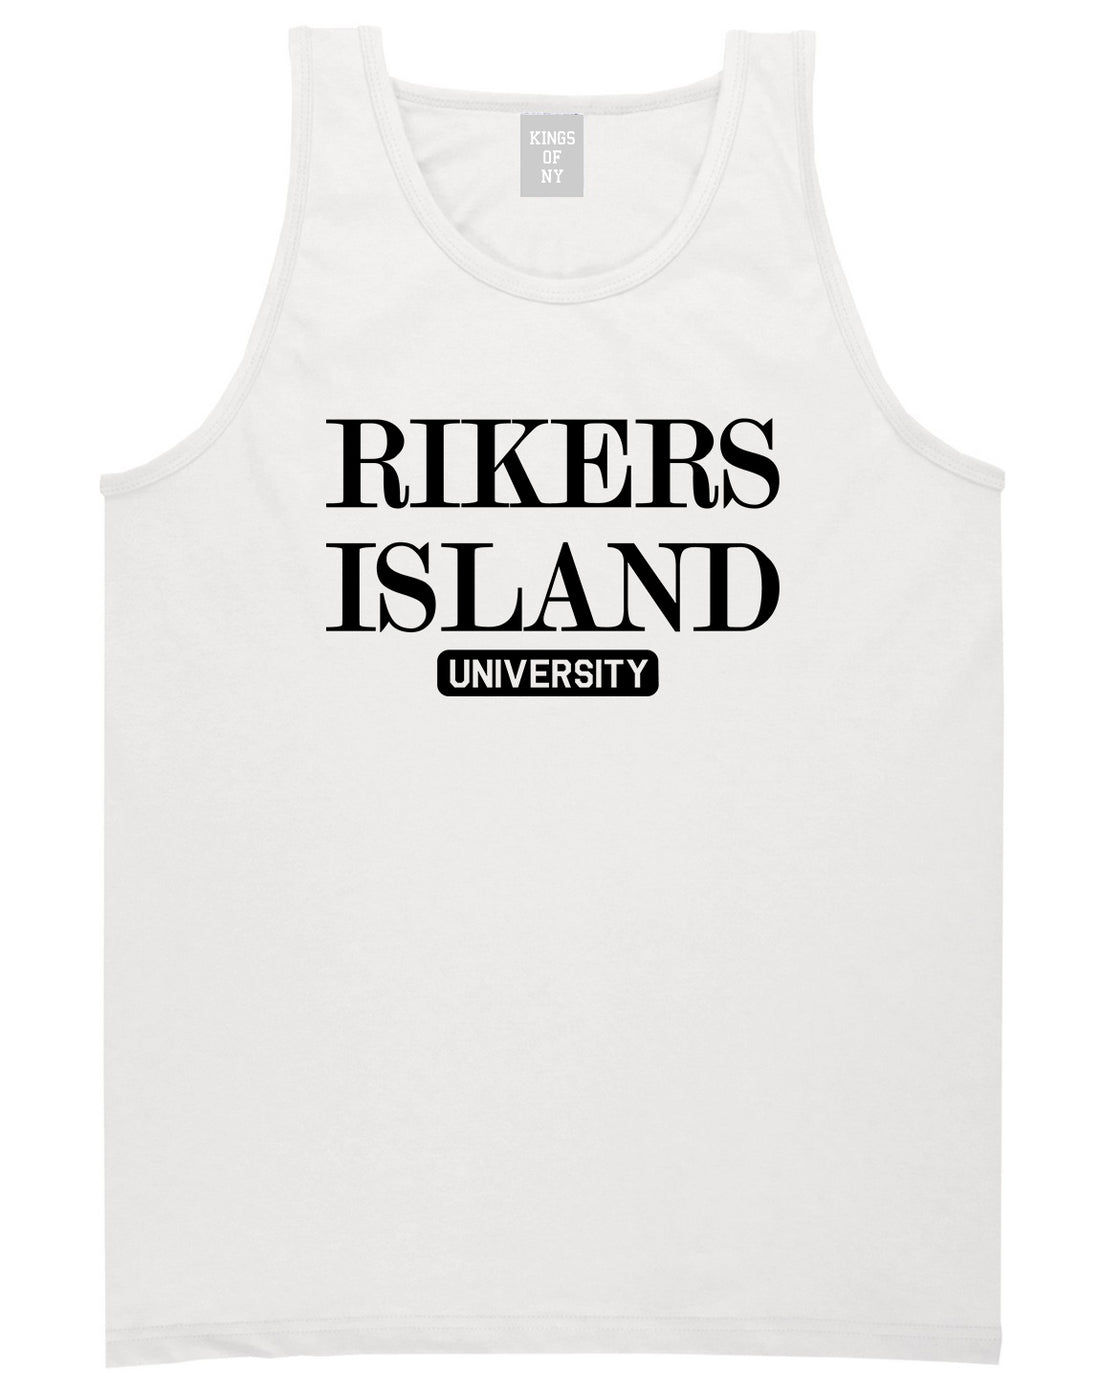 Rikers Island University Mens Tank Top T-Shirt White